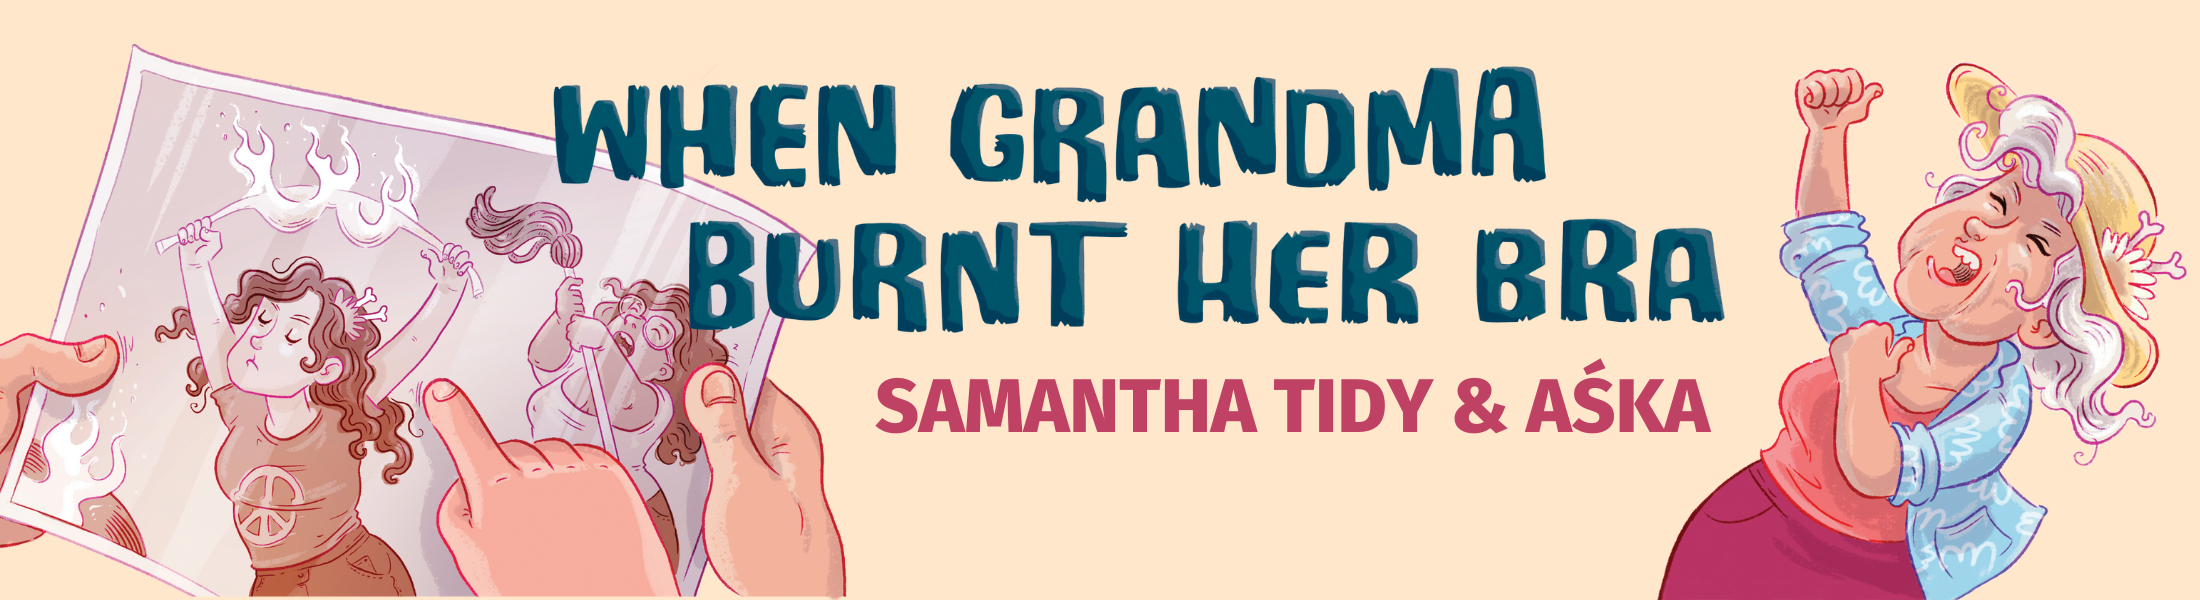 When Grandma Burnt Her Bra by Samantha Tidy and Aska